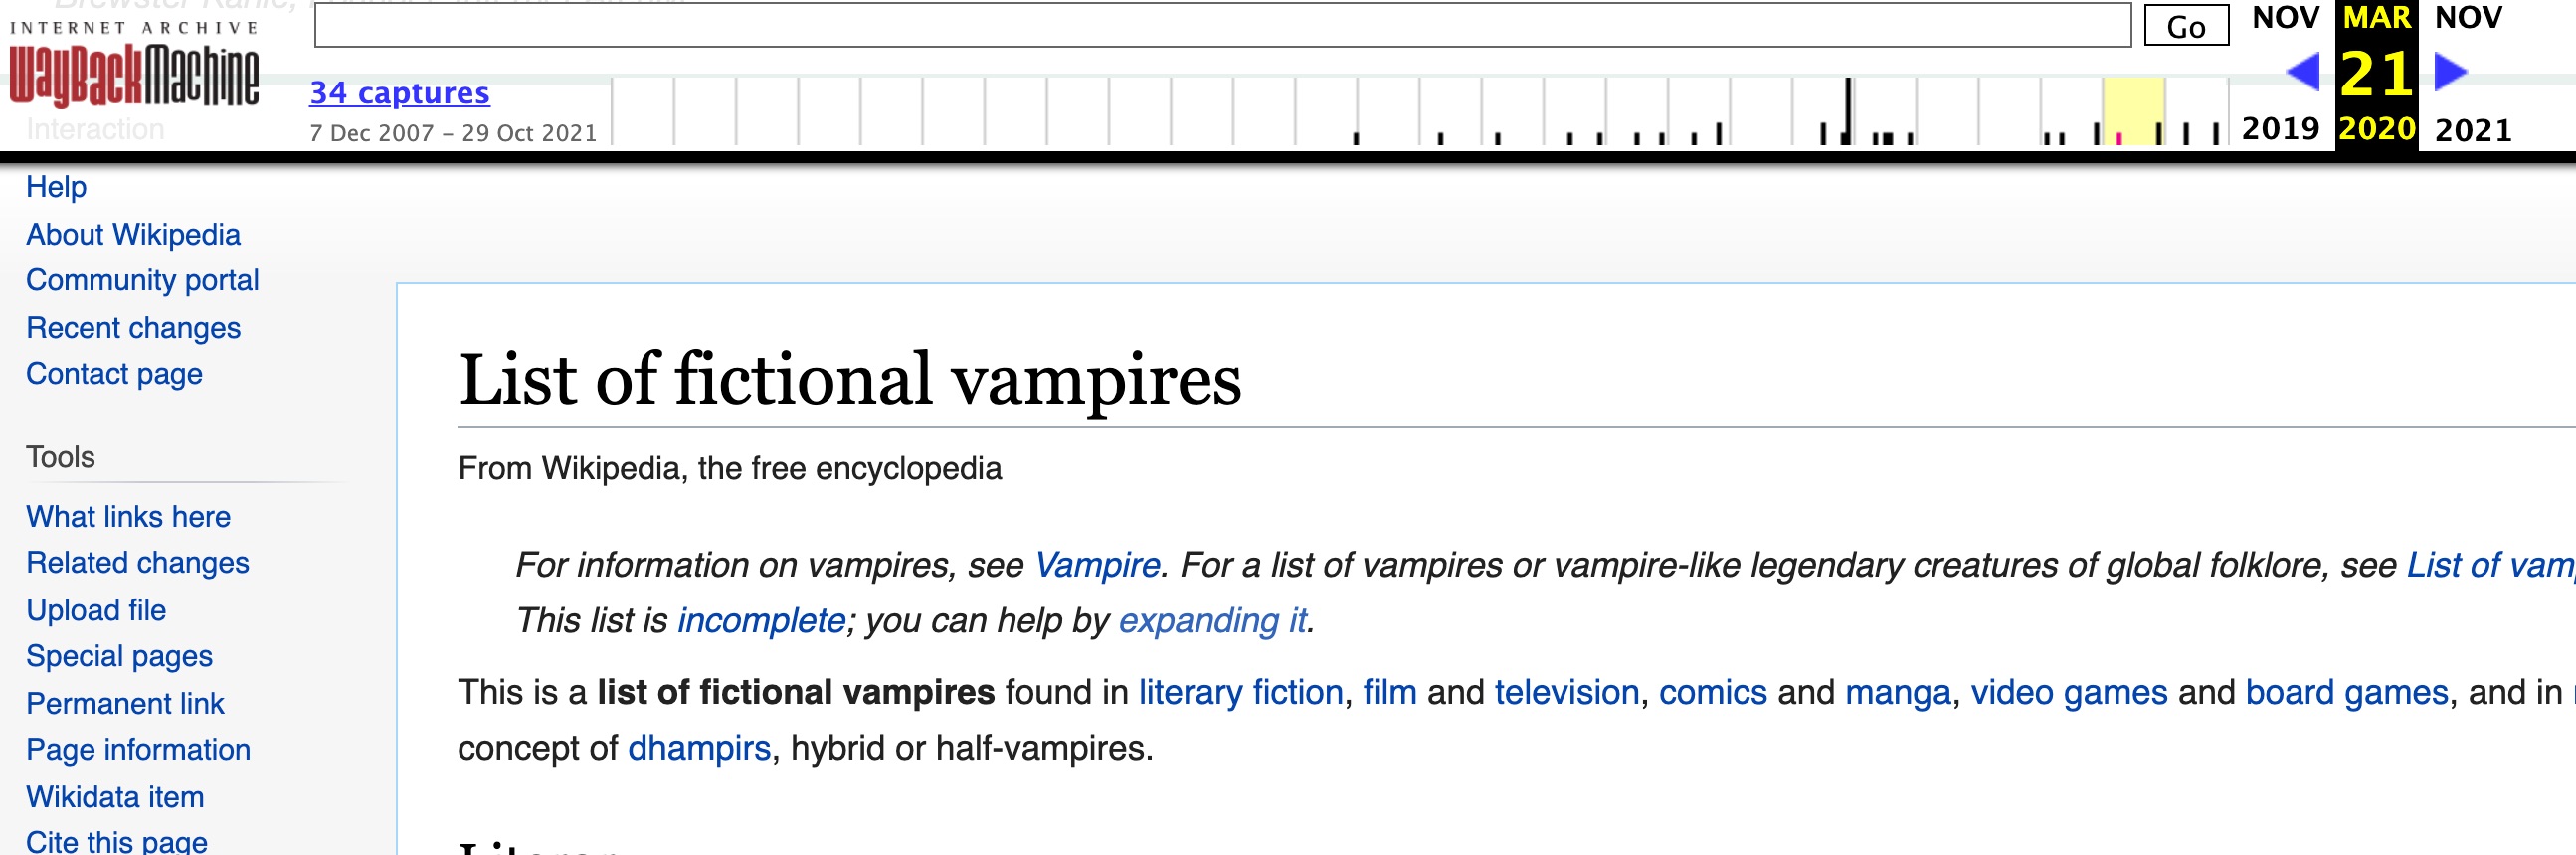 list of fictional vampires wikipedia